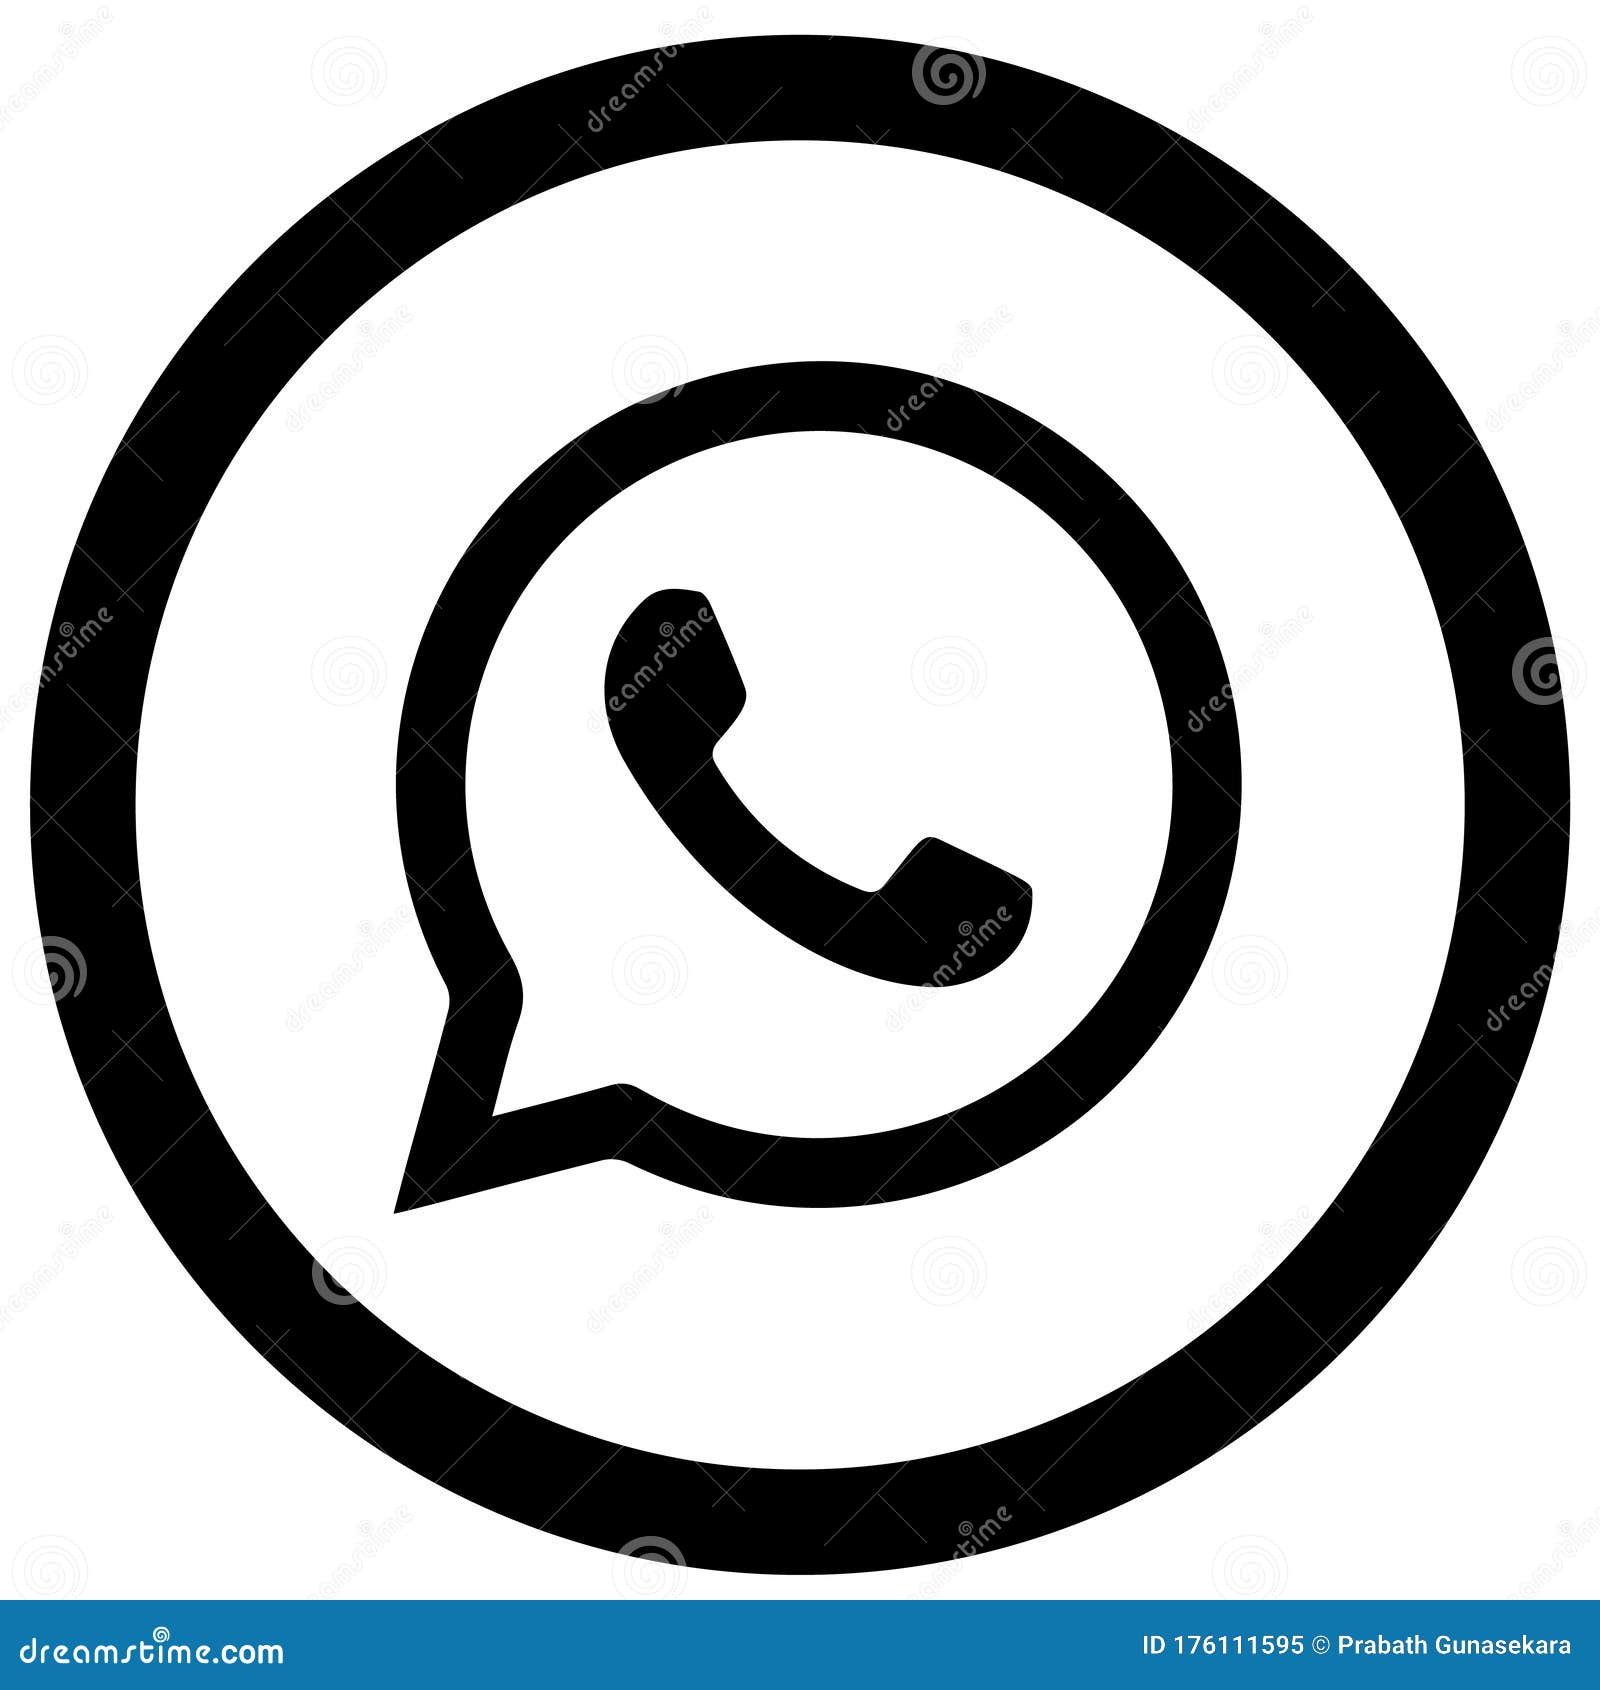 Rounded Black and White Whatsapp Icon Editorial Image - Illustration of  file, weblogos: 176111595